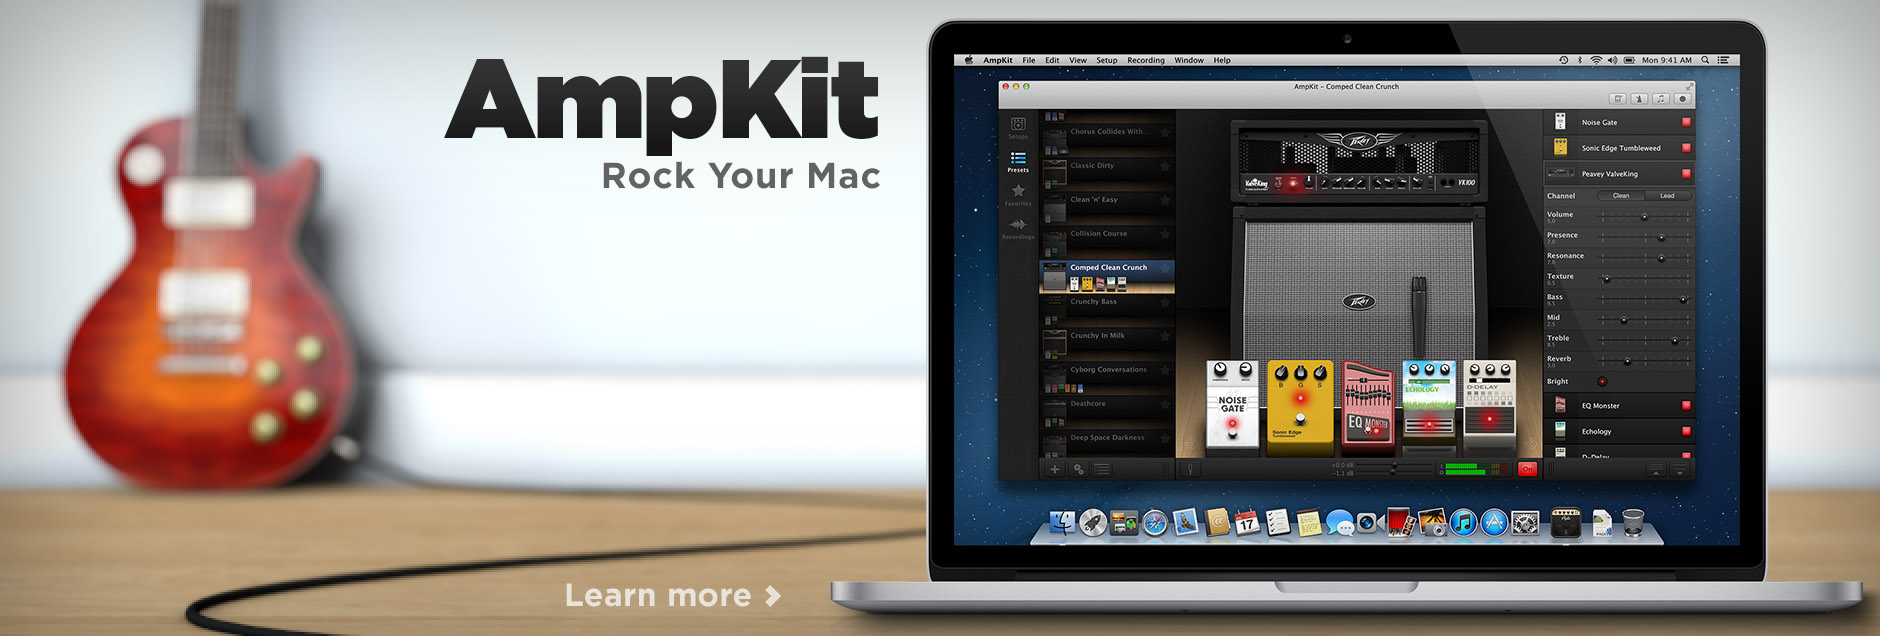 AmpKit - Rock your Mac